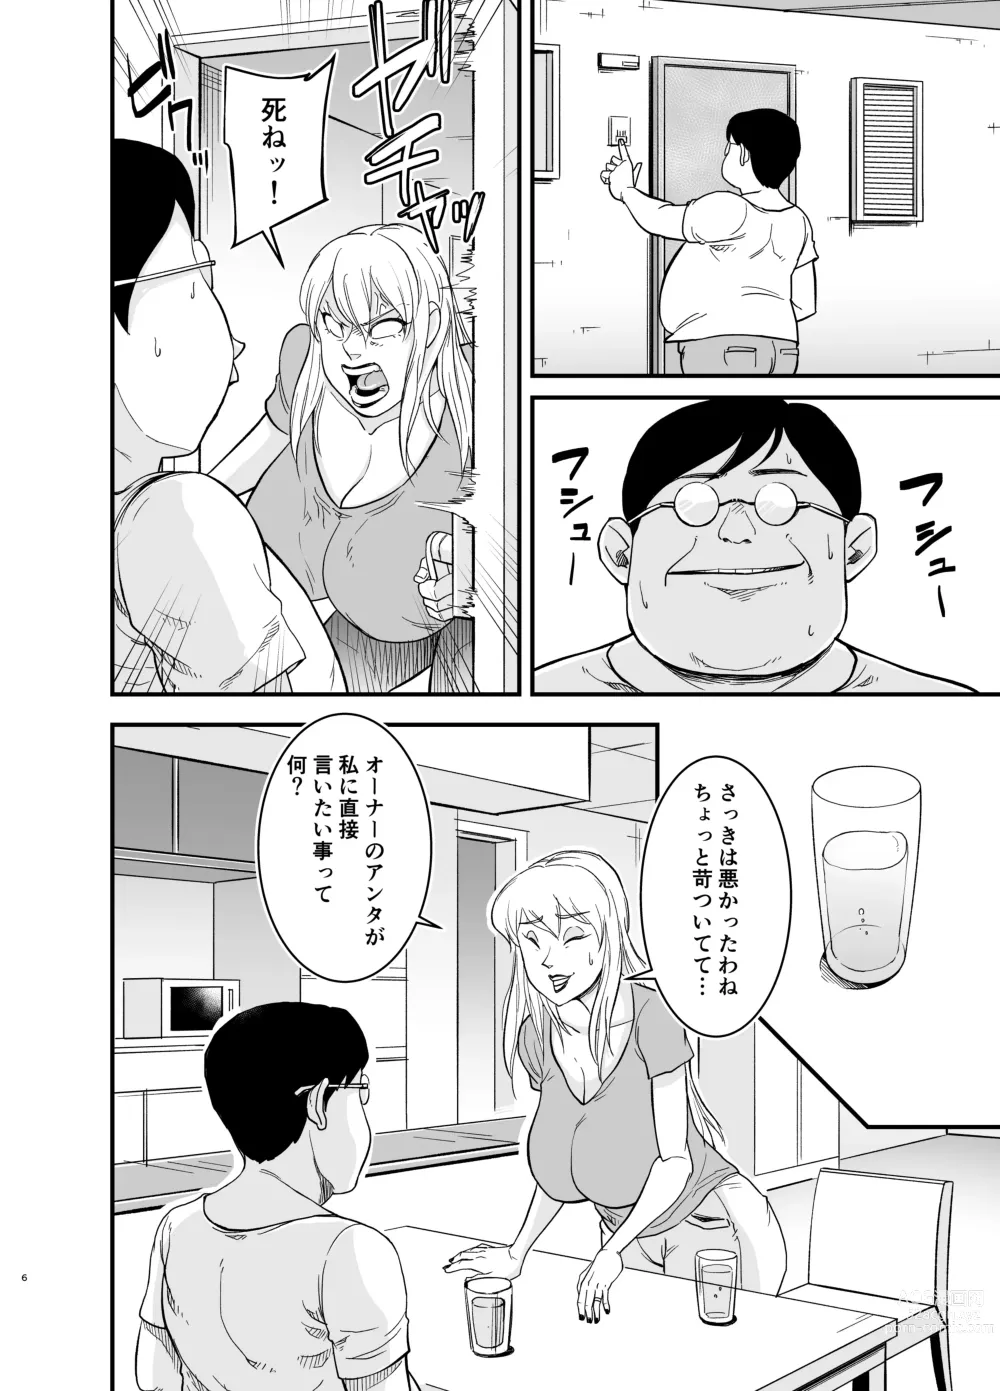 Page 7 of doujinshi Marina to Buta